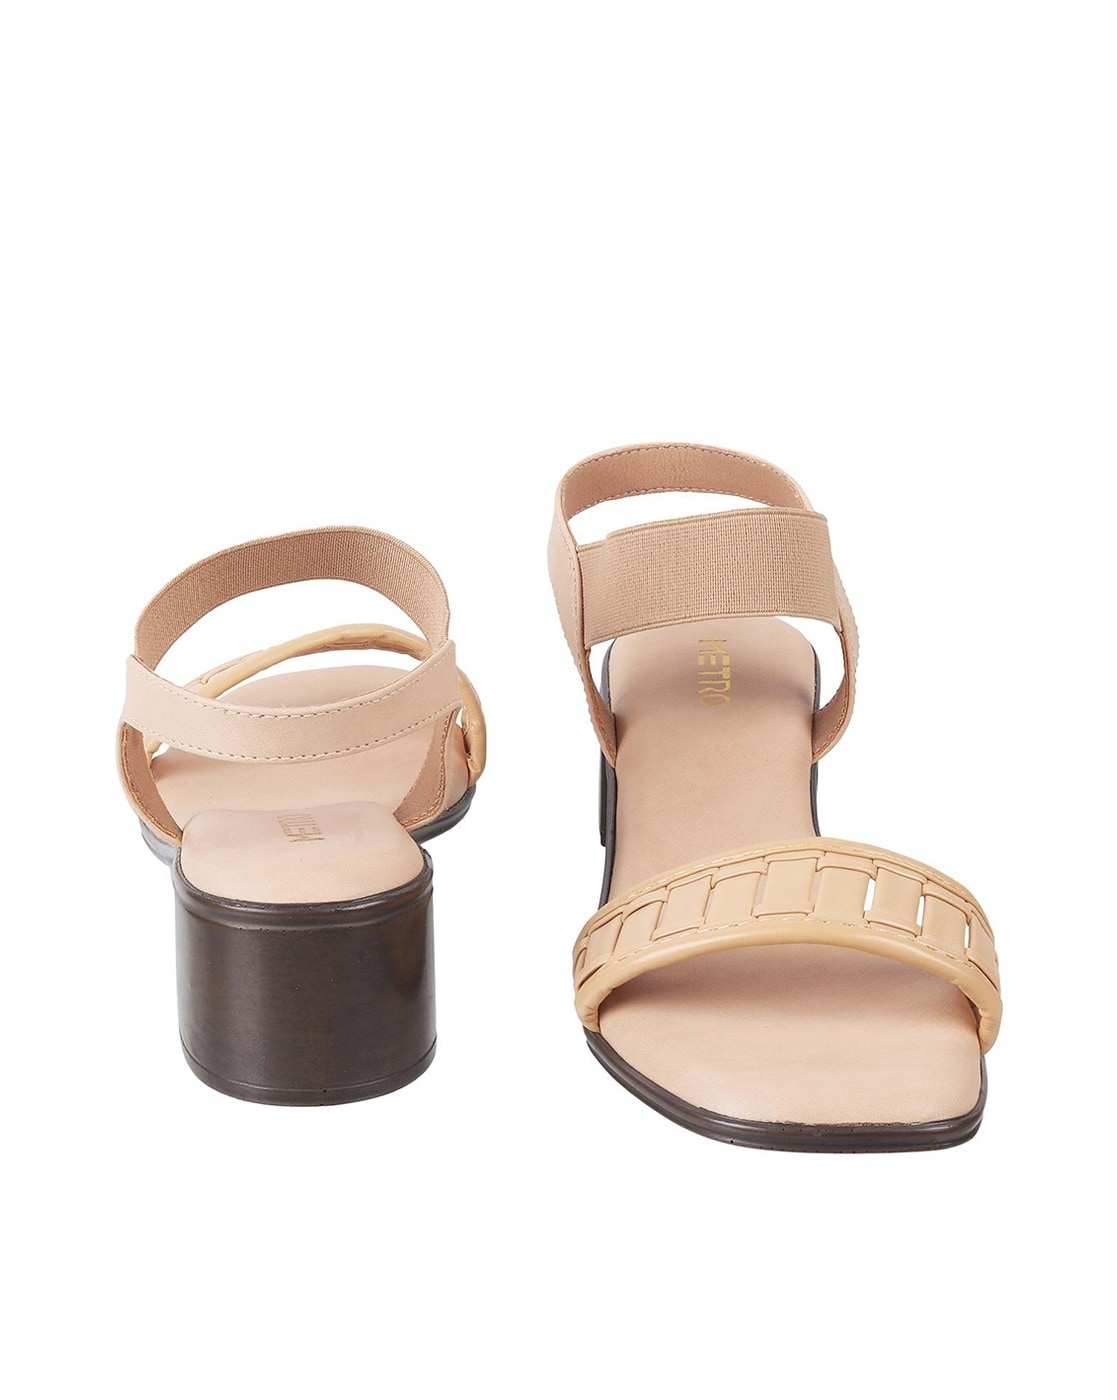 Buy Black Heeled Sandals for Women by Metro Online | Ajio.com